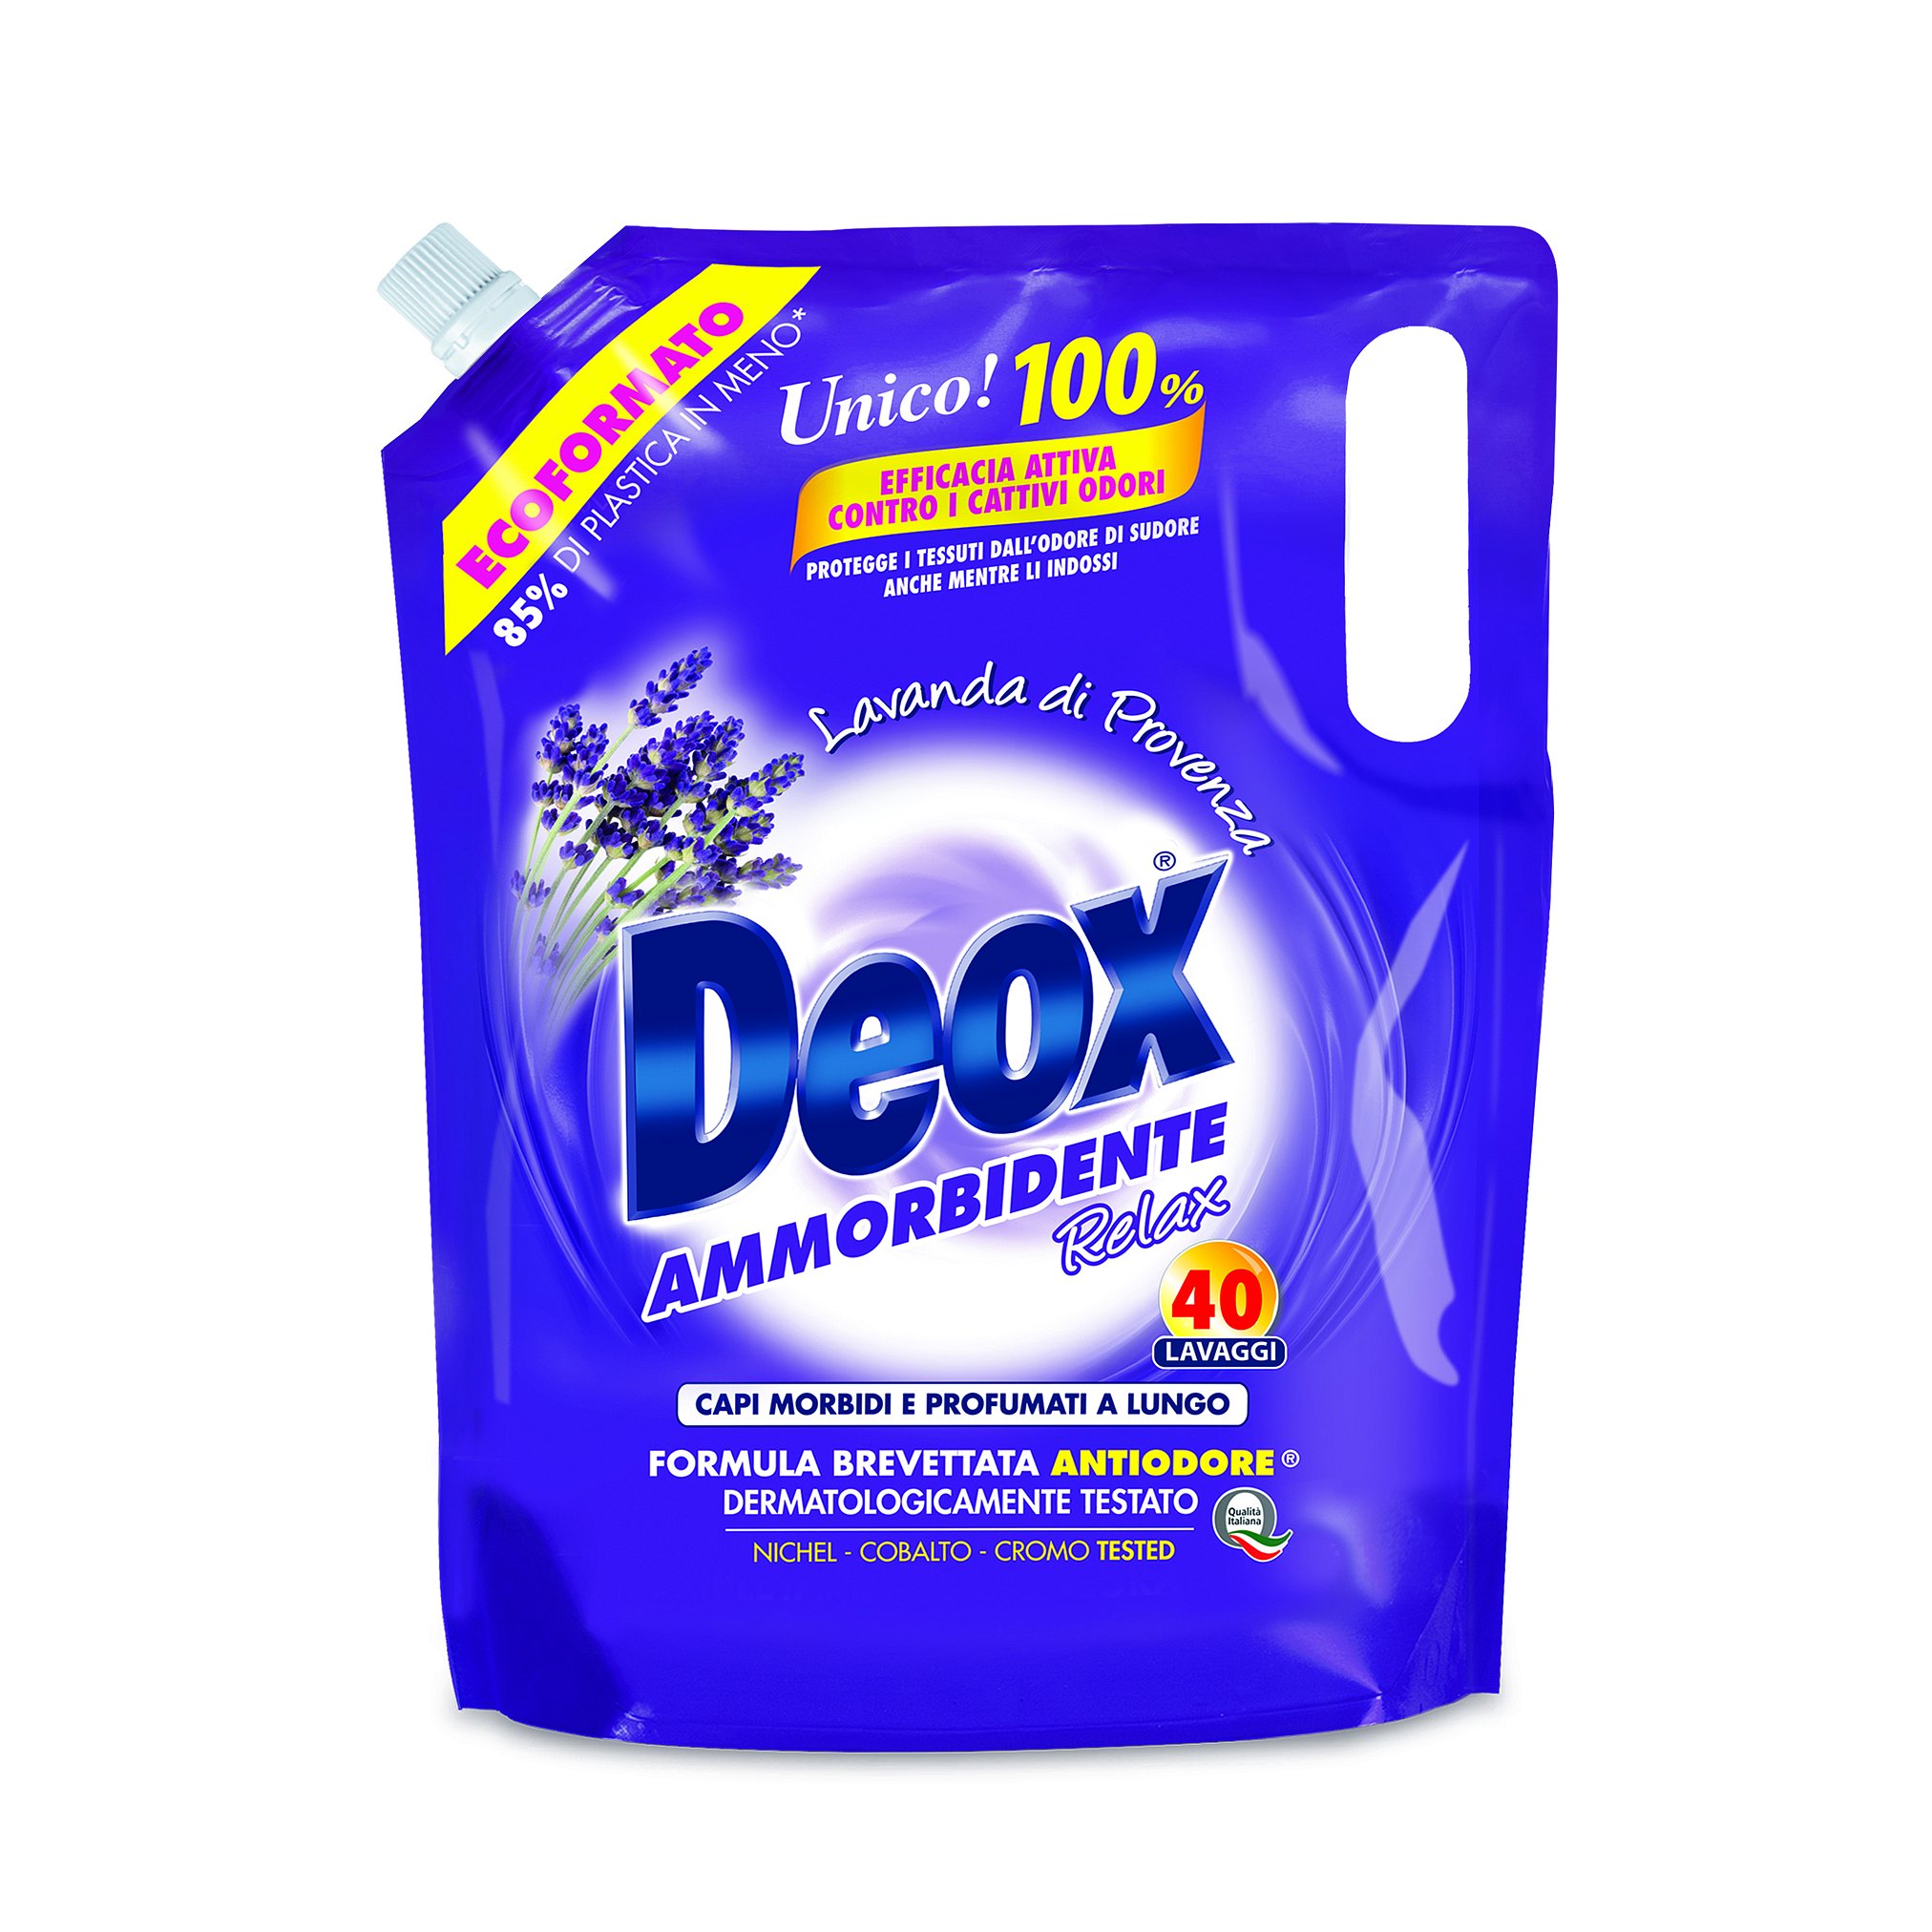 Deox Ammorbidente Ecoformato koncentrovaná aviváž, levandule, 40 praní 2000 ml